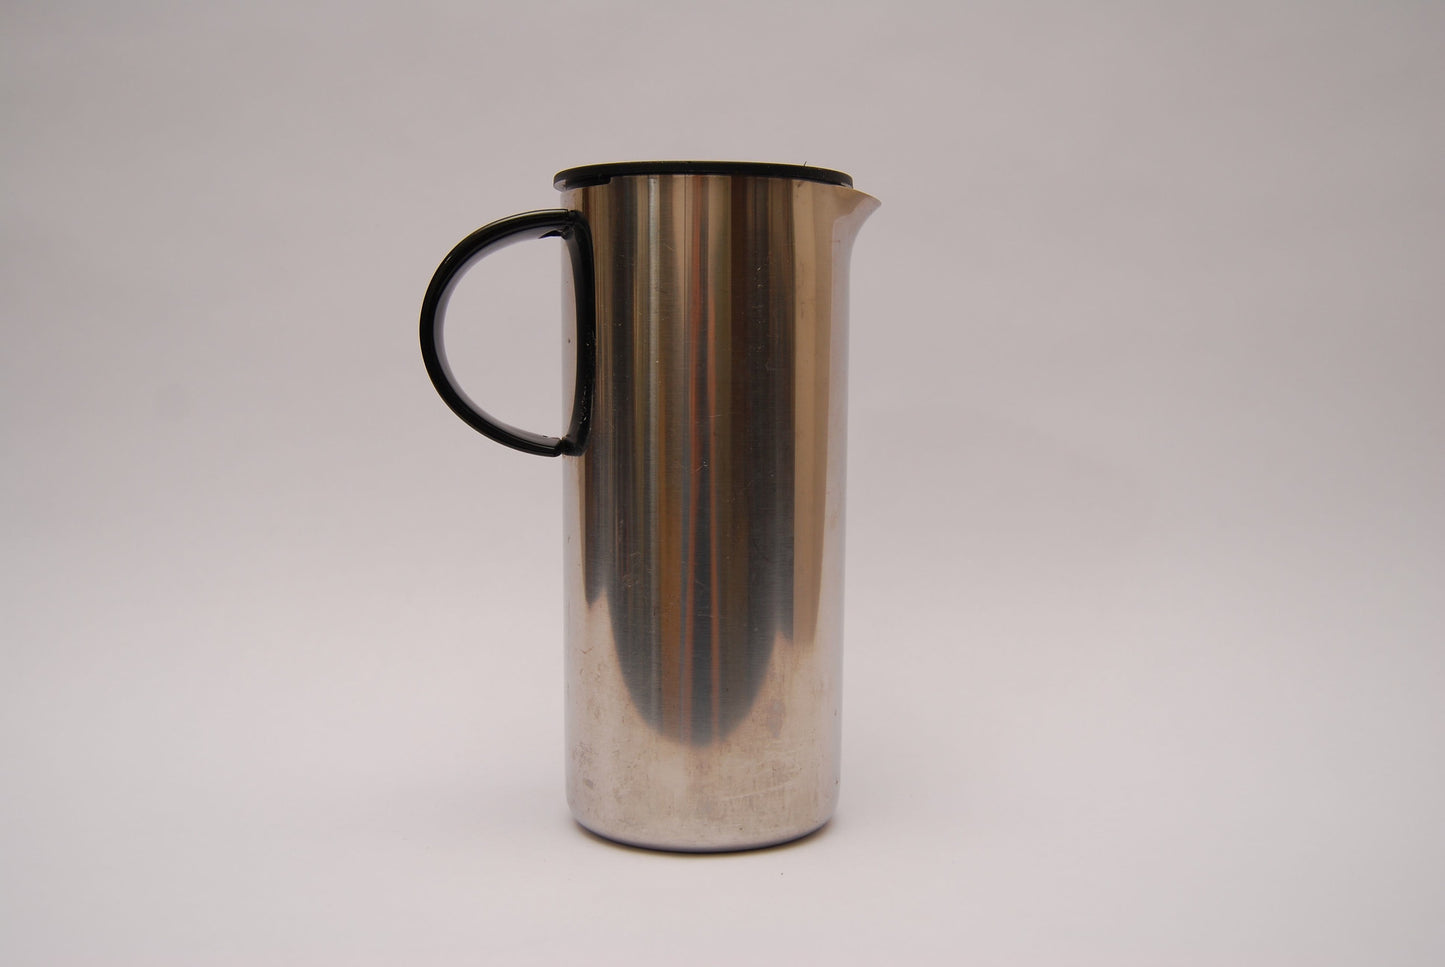 Stainless steel jug by Stelton